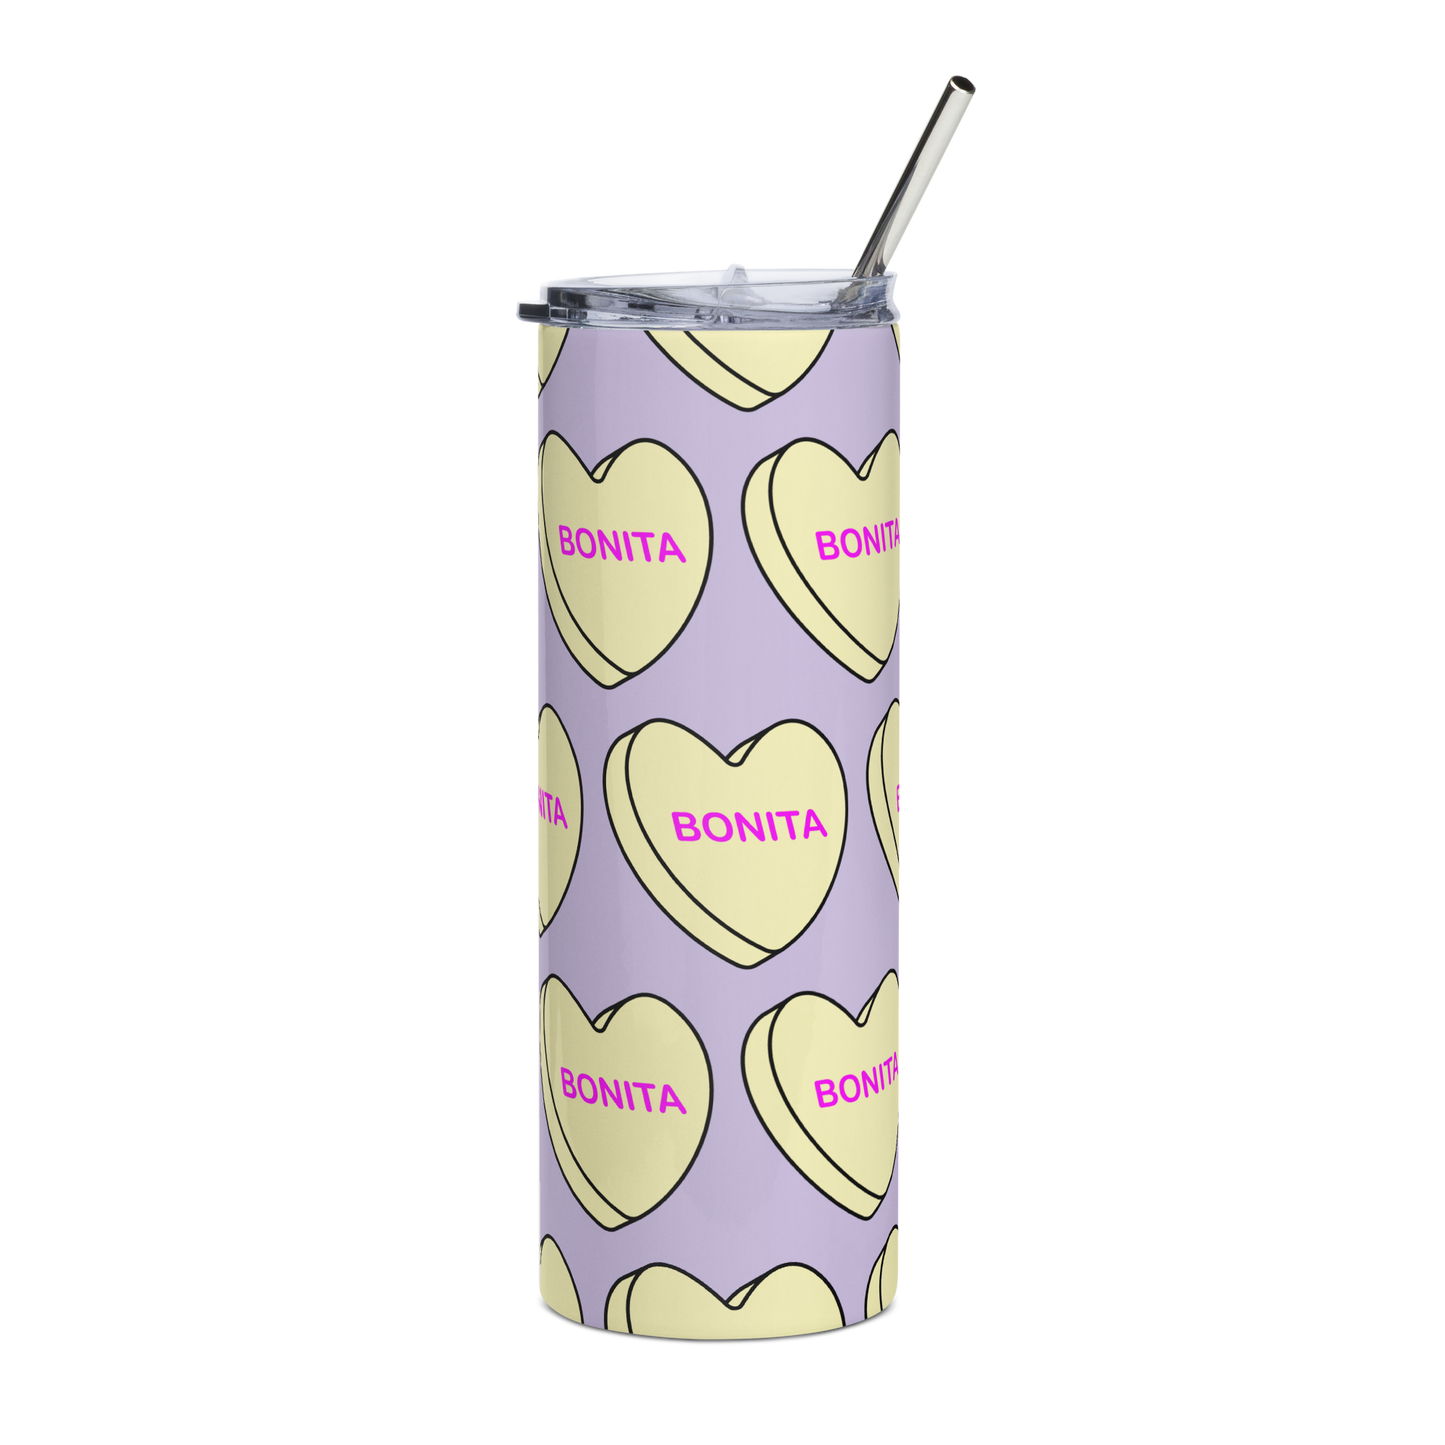 Bonita Candy Conversation Heart - Stainless steel tumbler